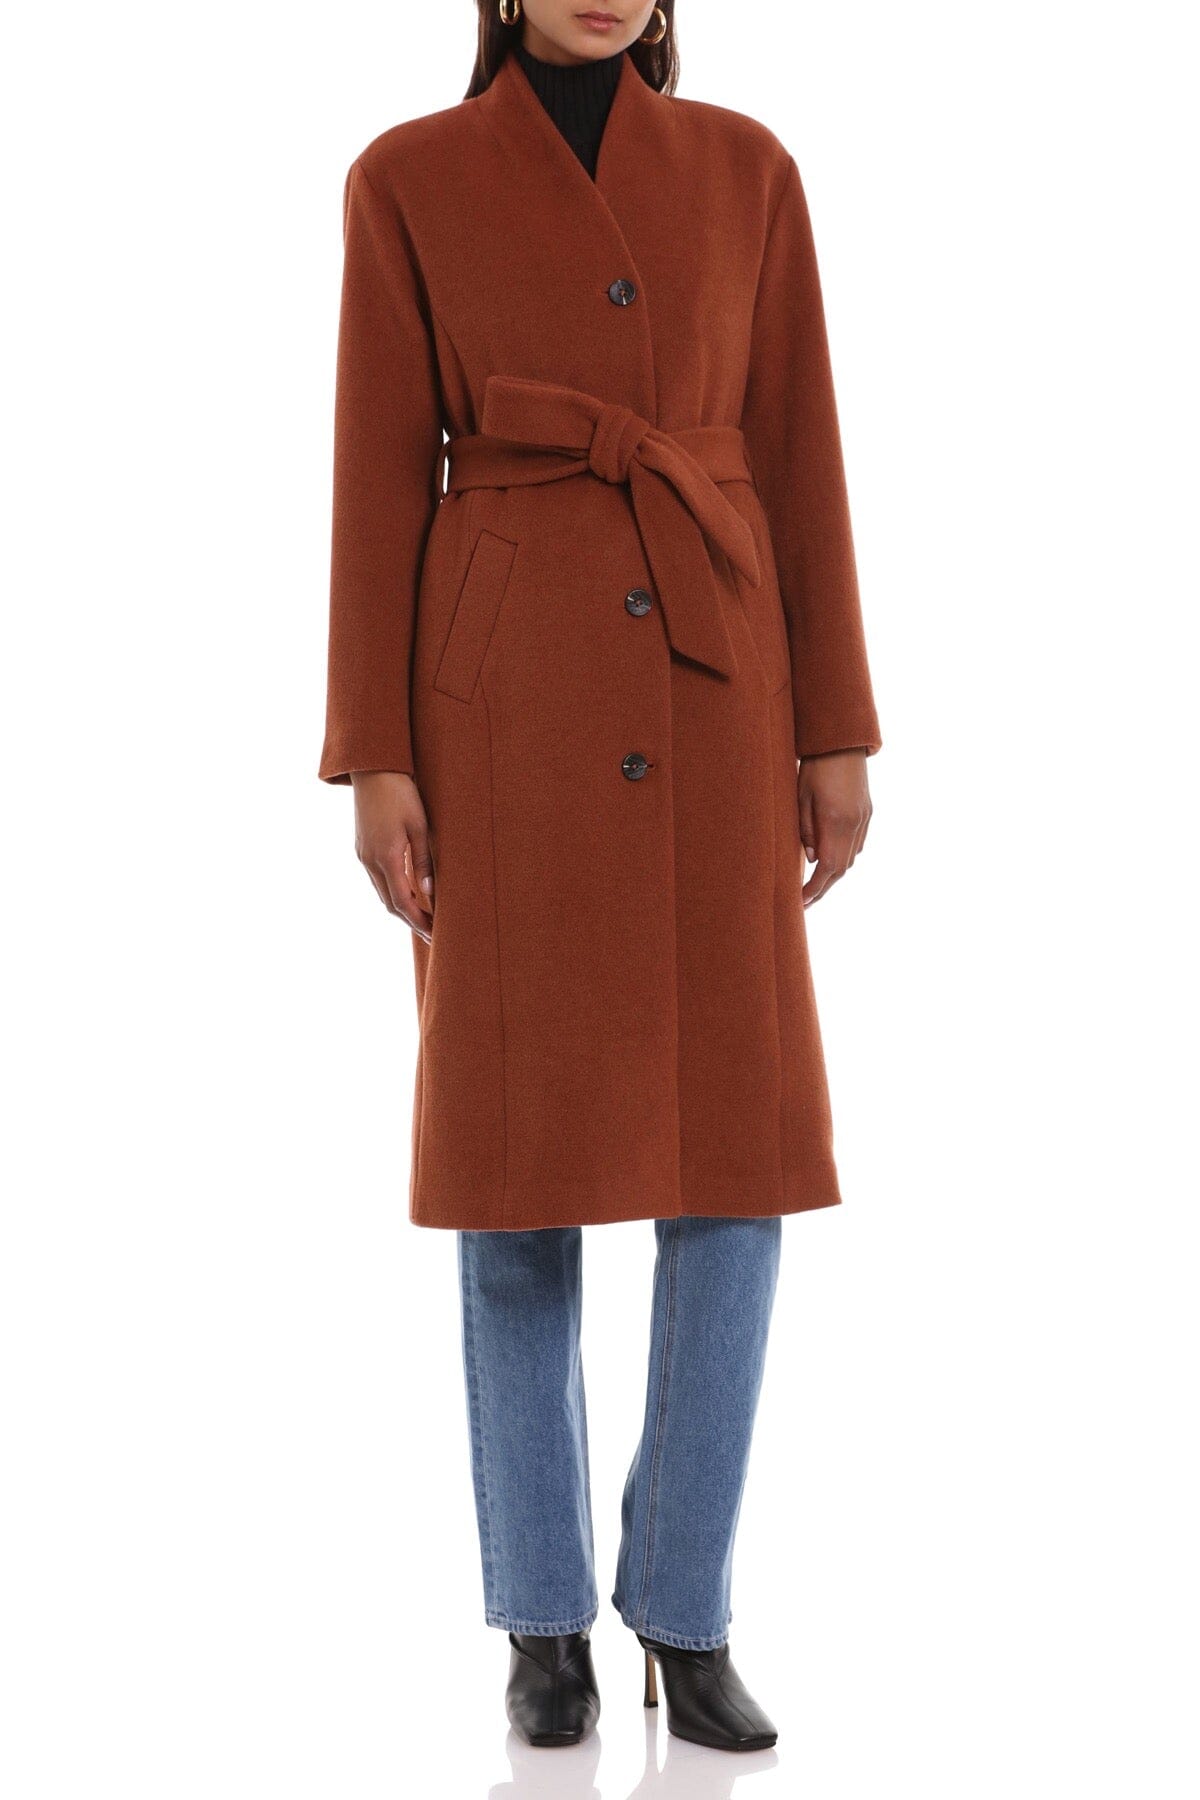 Cinnamon brown wool blend overlap collar long coat jacket - 